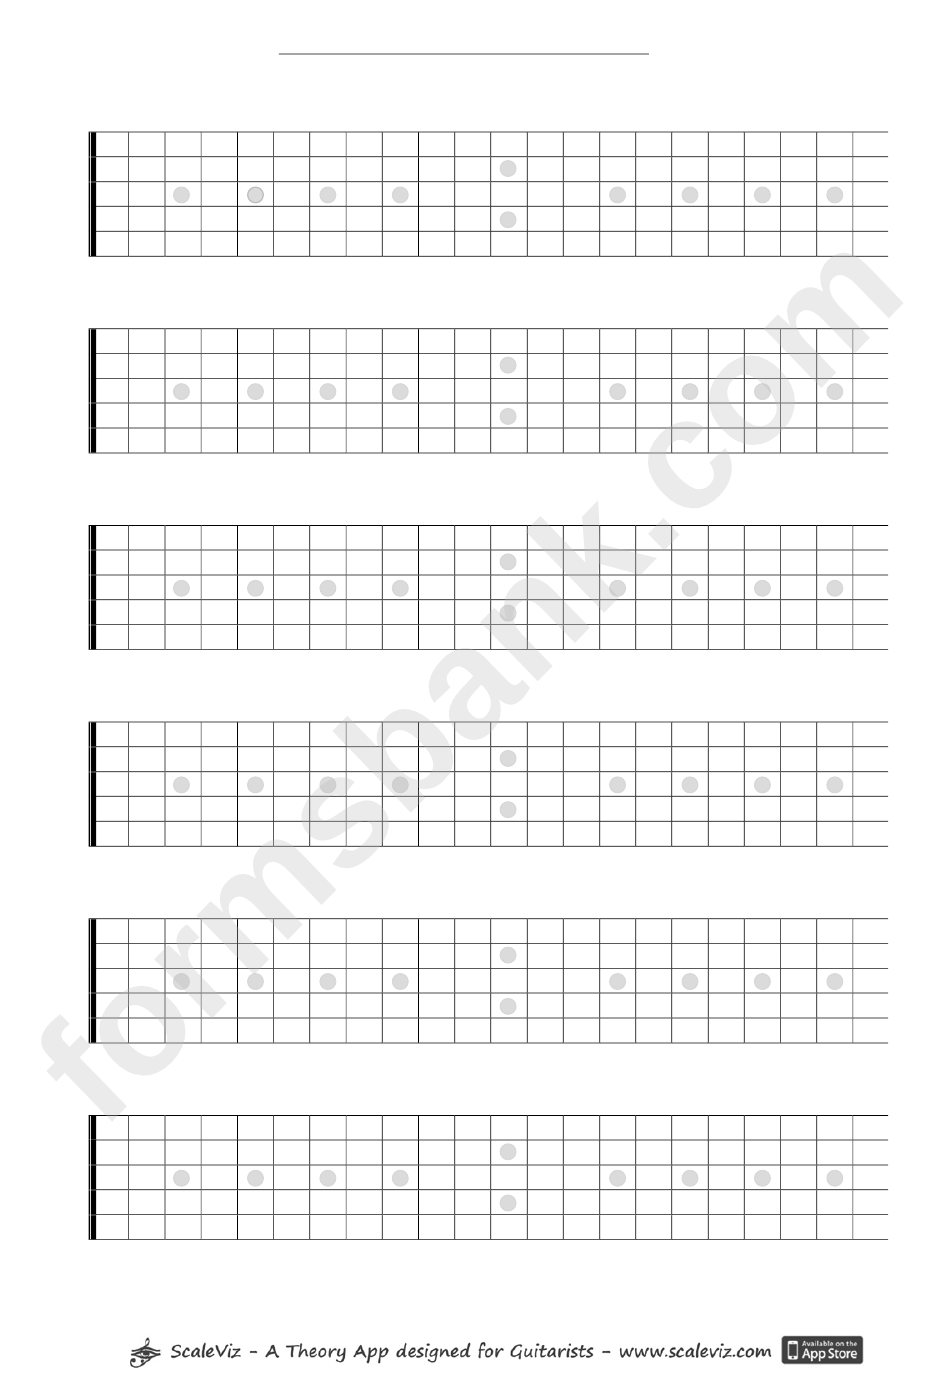 blank guitar notes neck diagram pdf